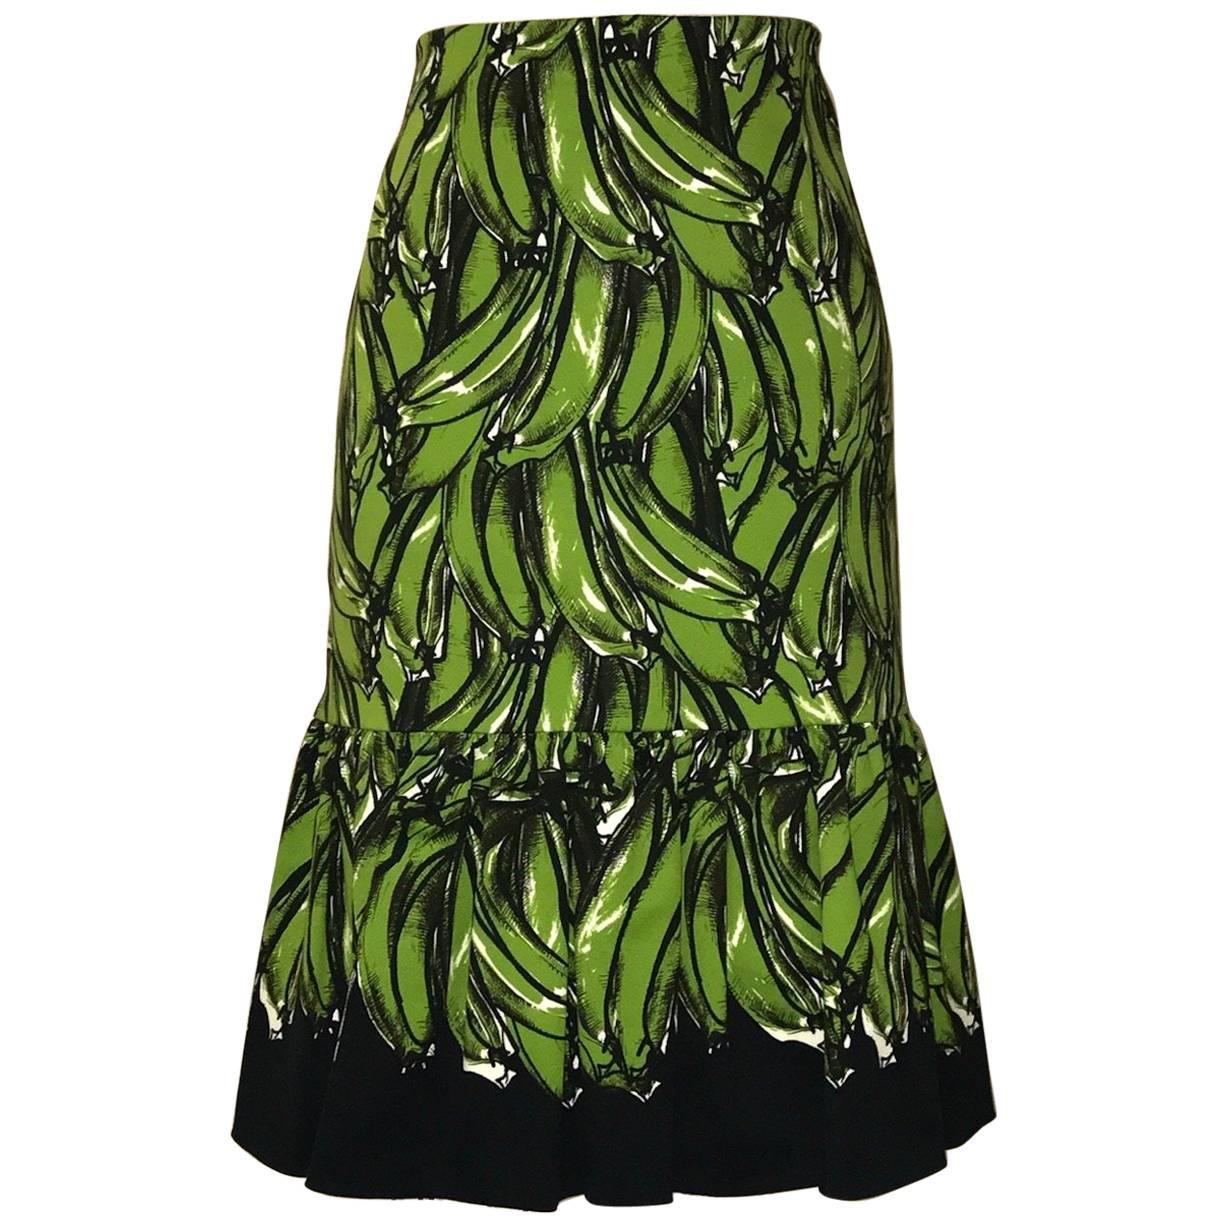 Prada 2011 Green and Black Banana Print Pencil Skirt with Ruffle Bottom